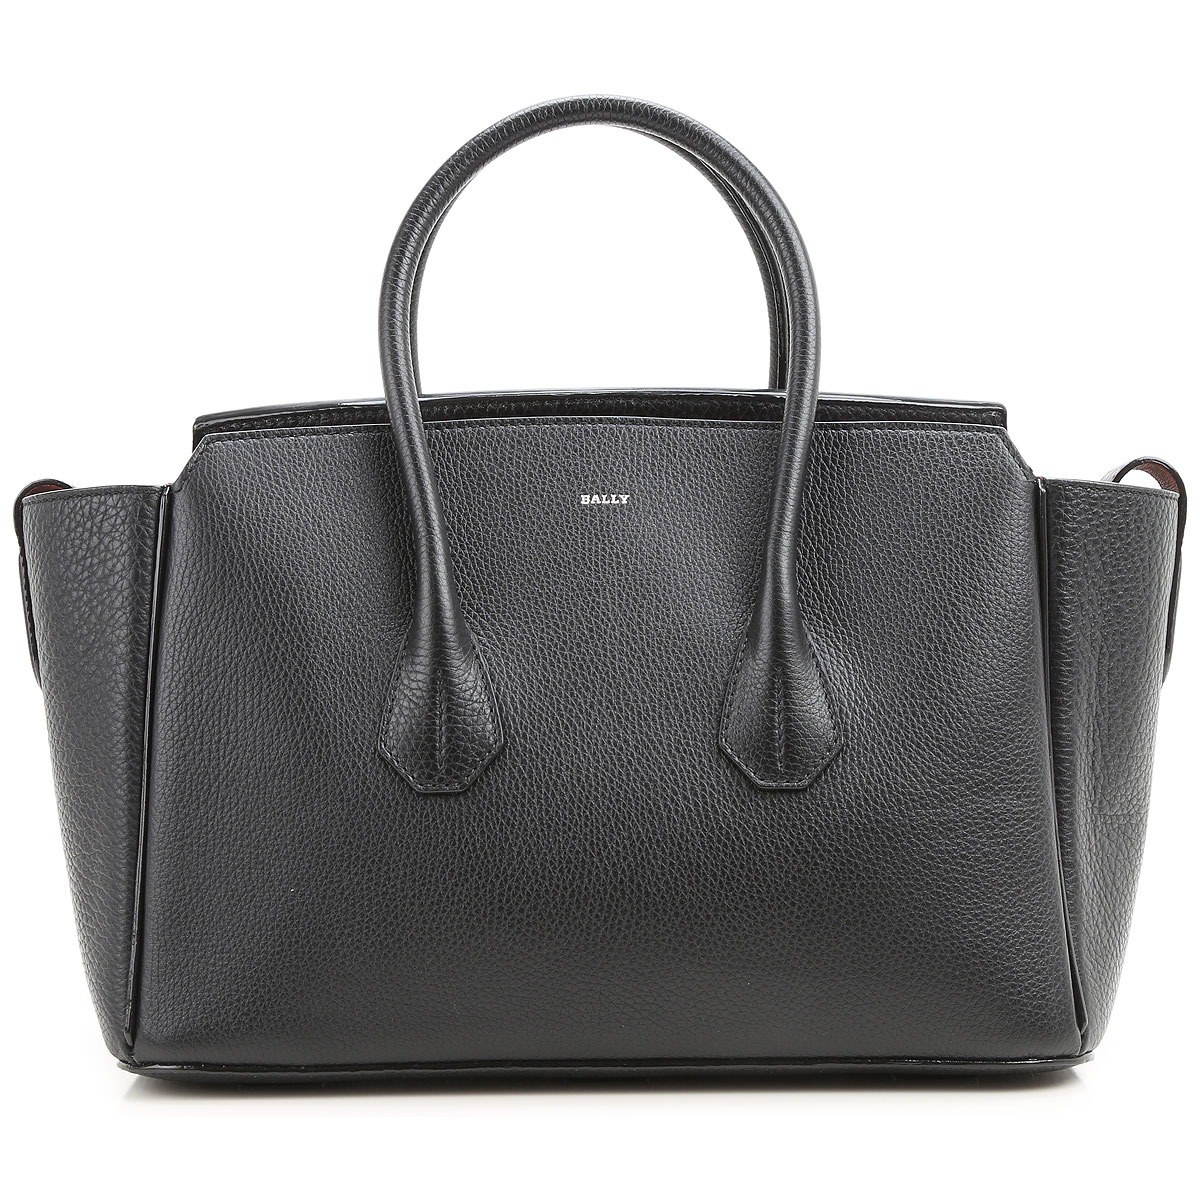 Handbags Bally, Style code: 619186-sommet-black